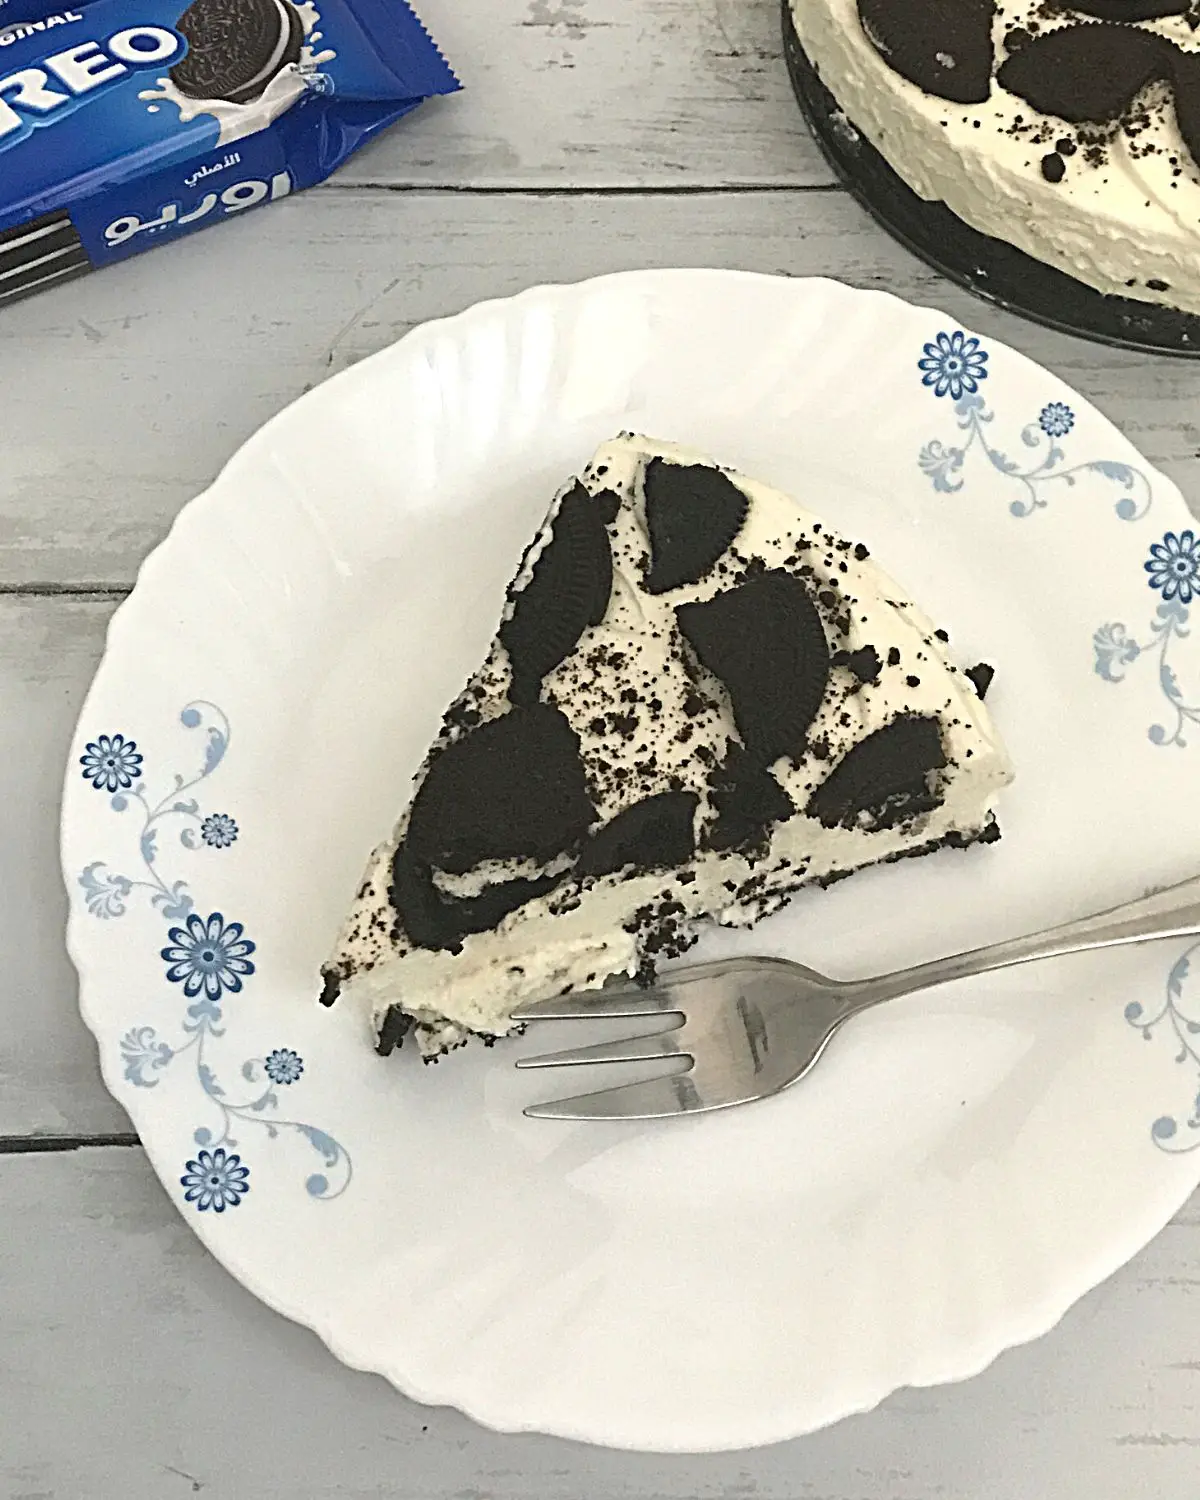 a slice of no bake oreo cheesecake